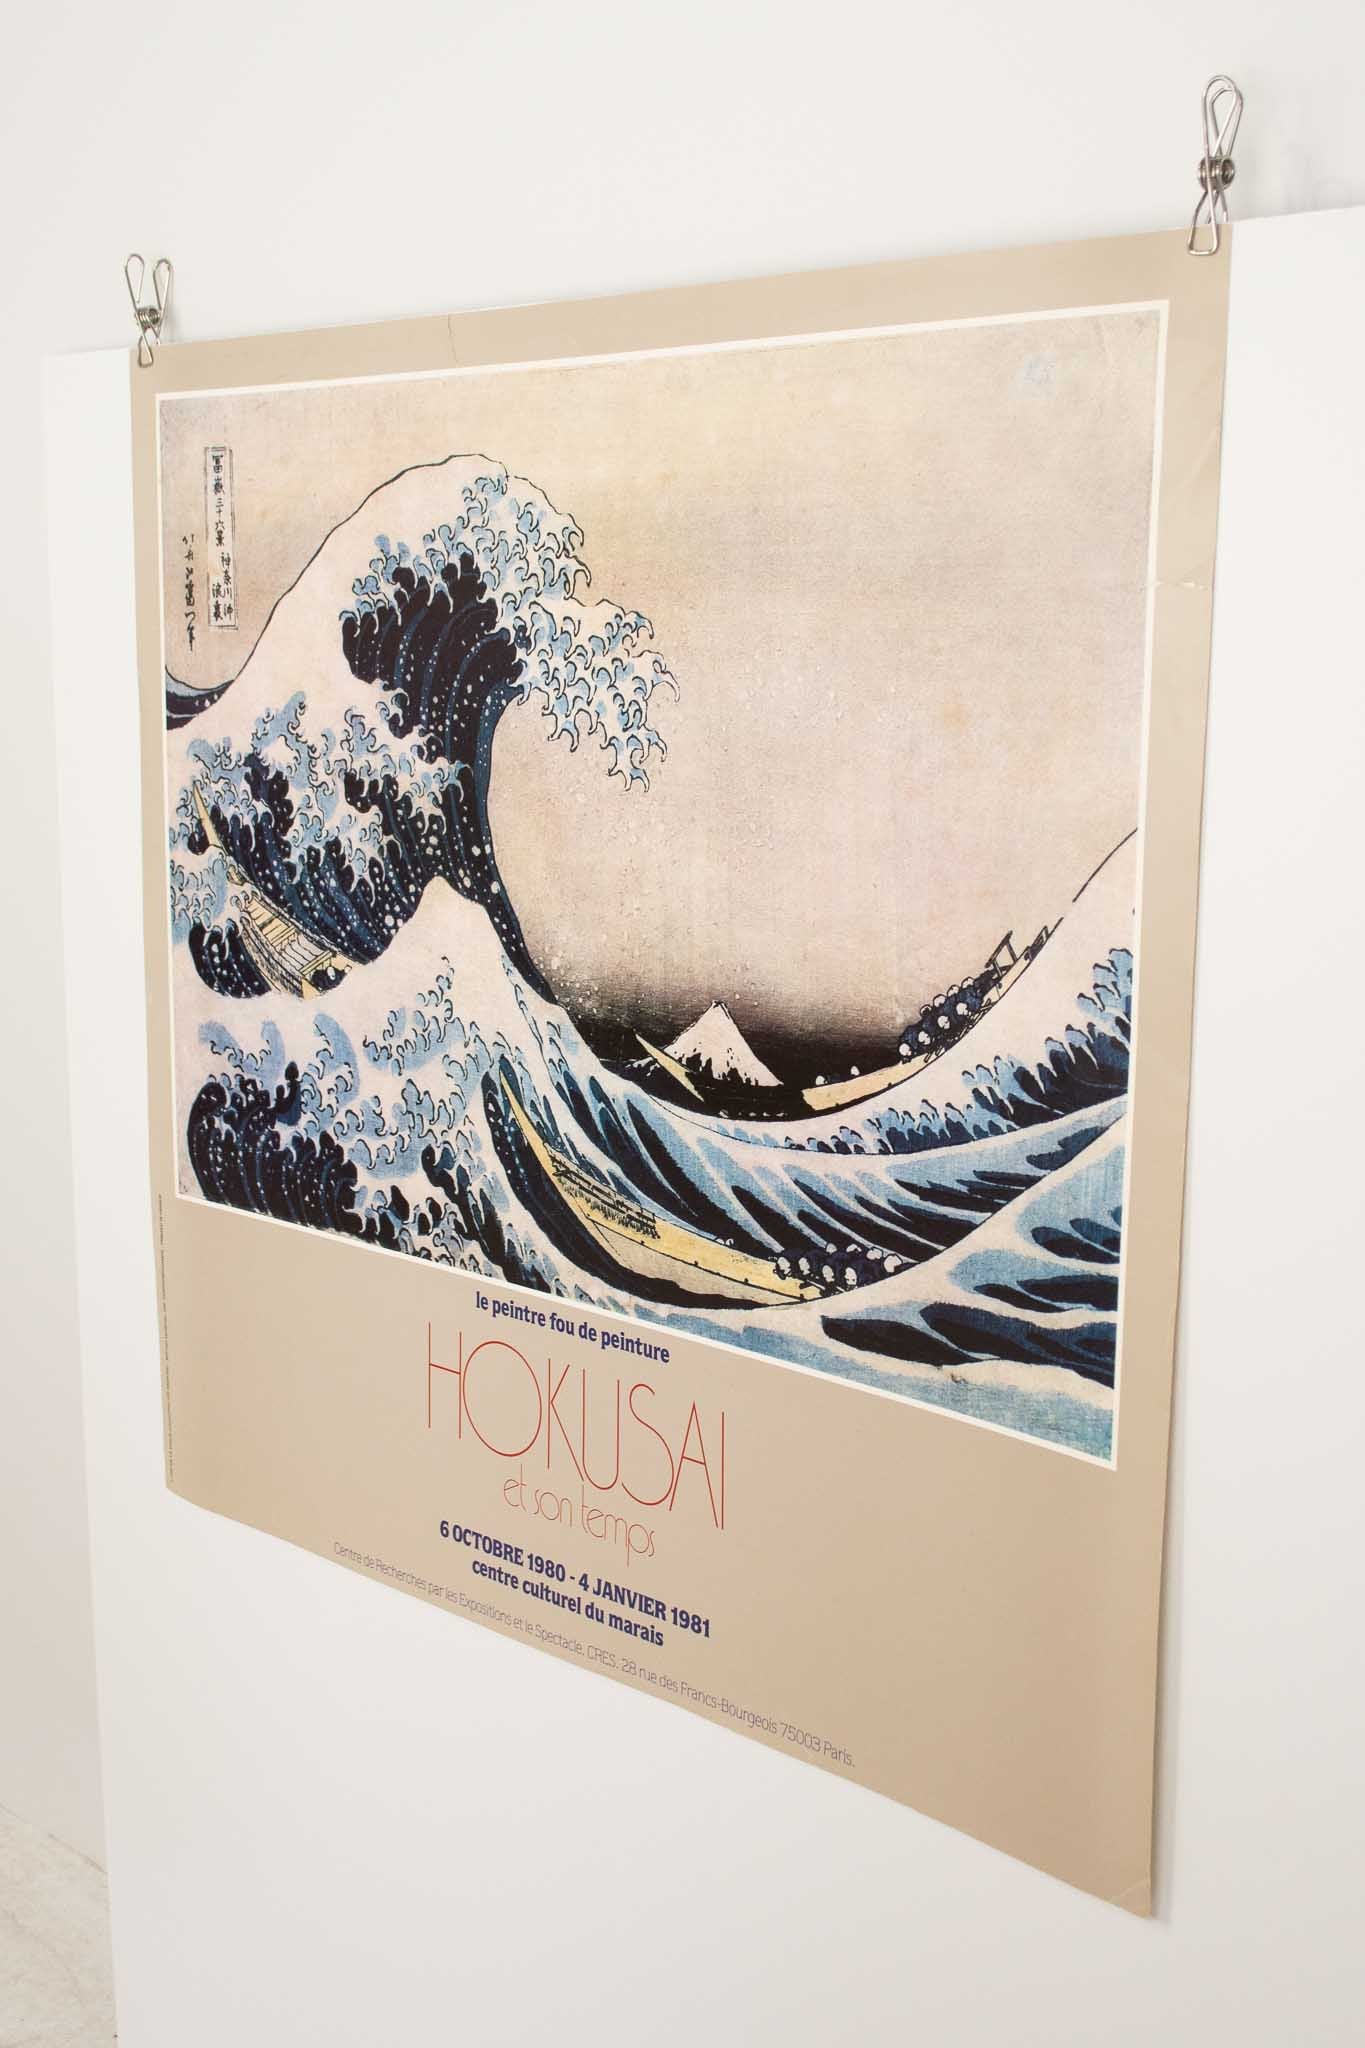 Hokusai "The Great Wave off Kanagawa"  Print